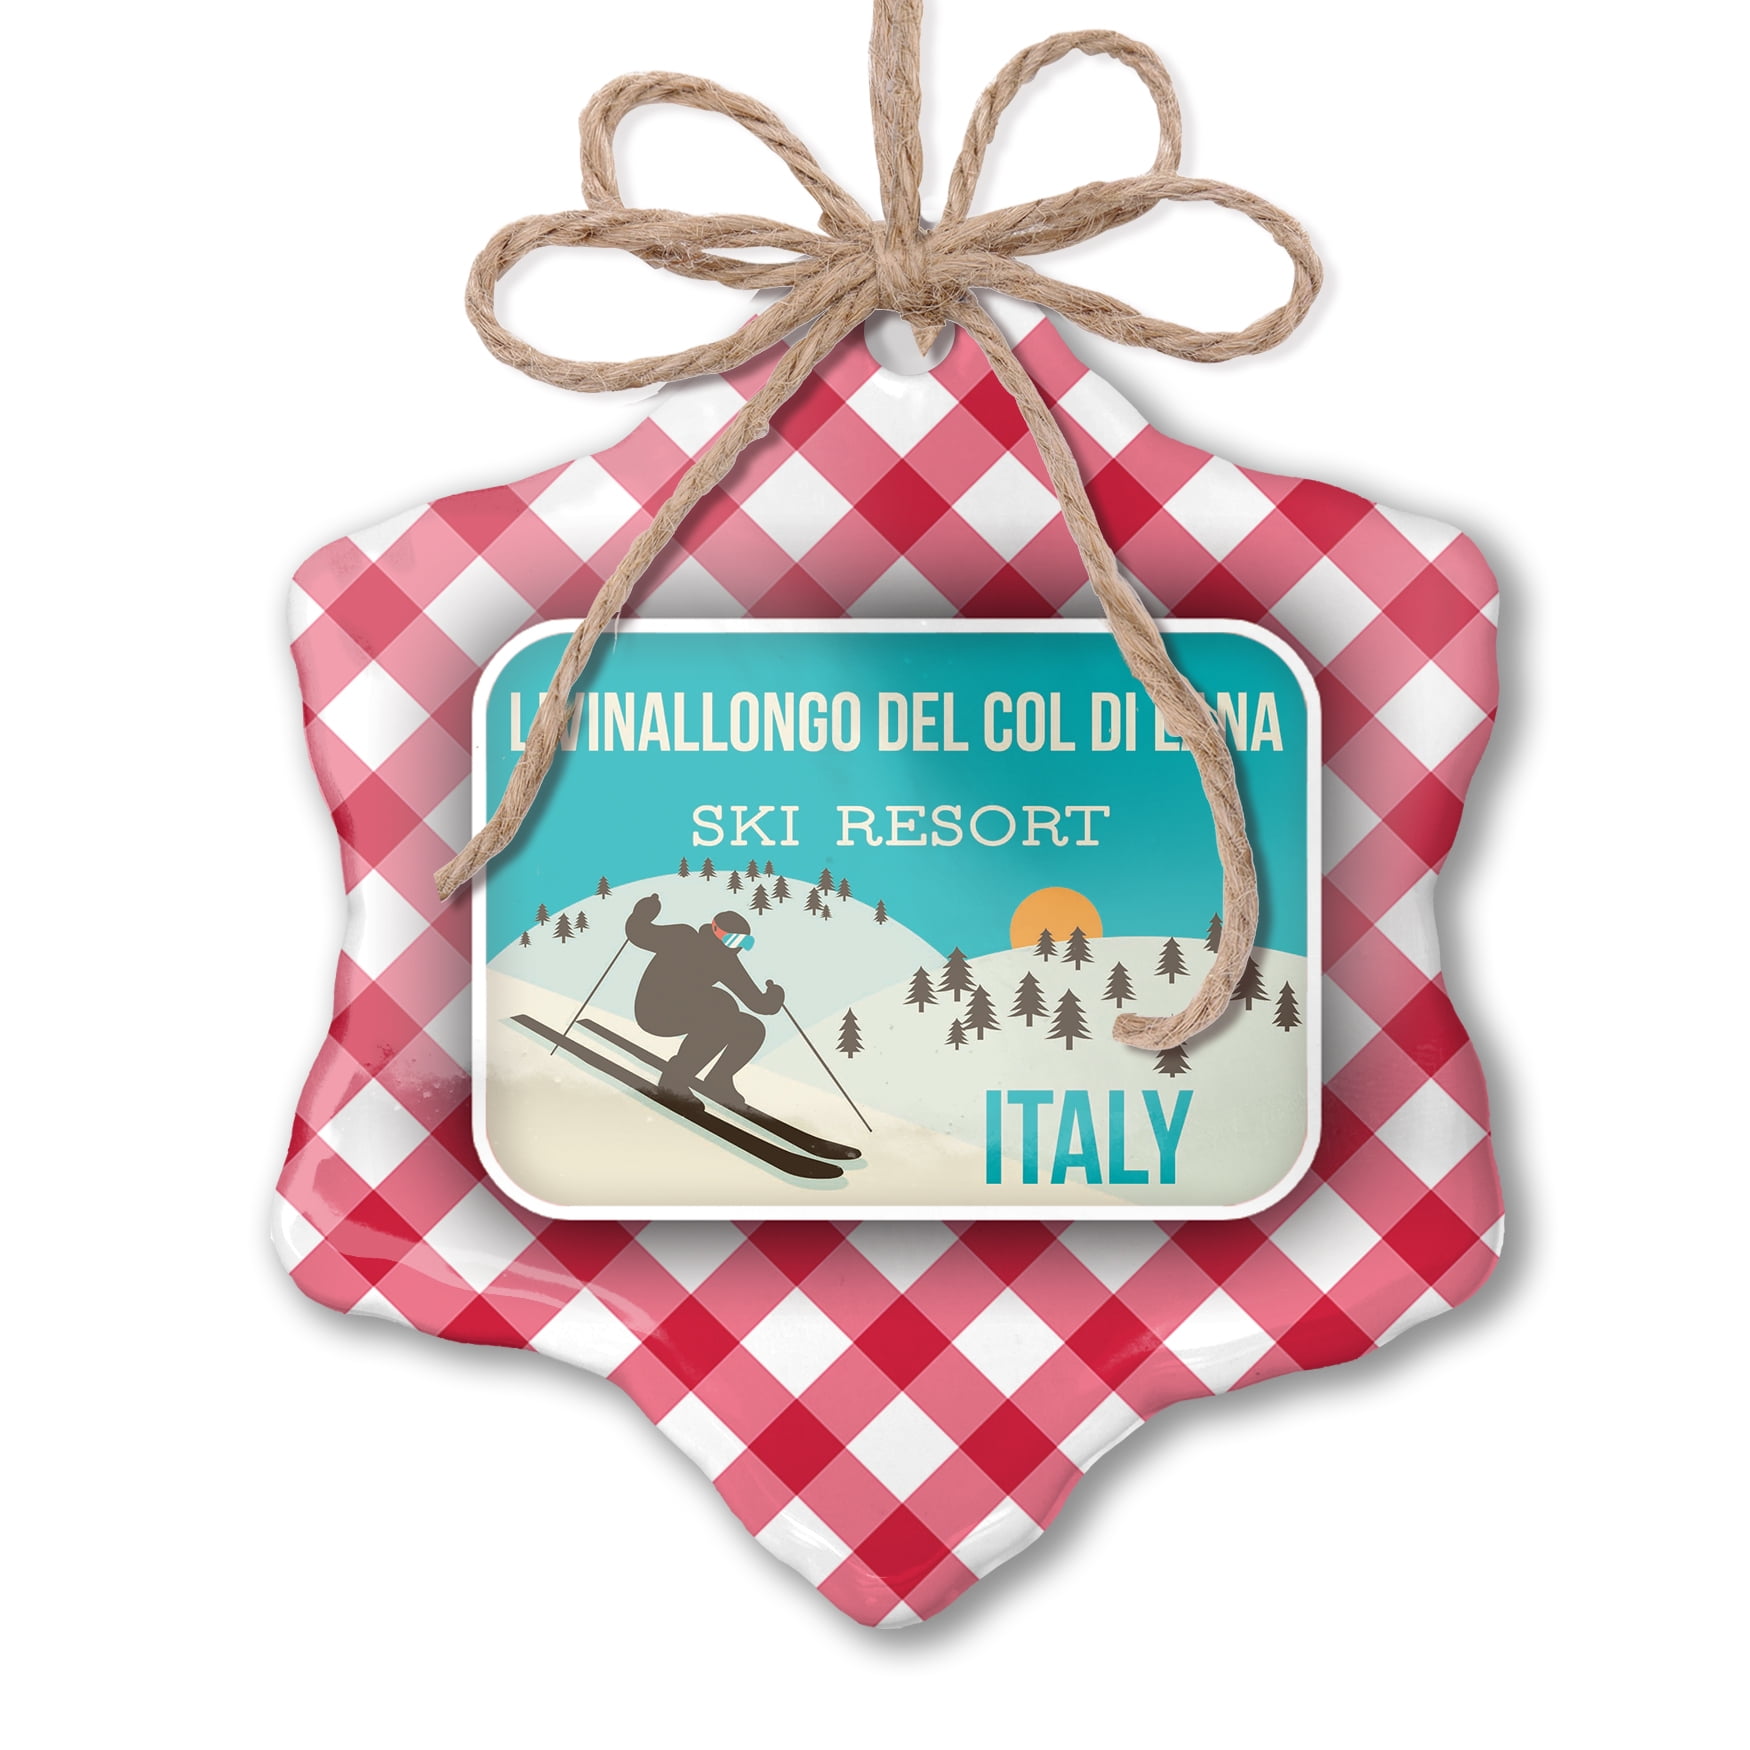 NEONBLOND Personalized Name Engraved Livinallongo del Col di Lana Ski Resort Italy Ski Resort Dogtag Necklace